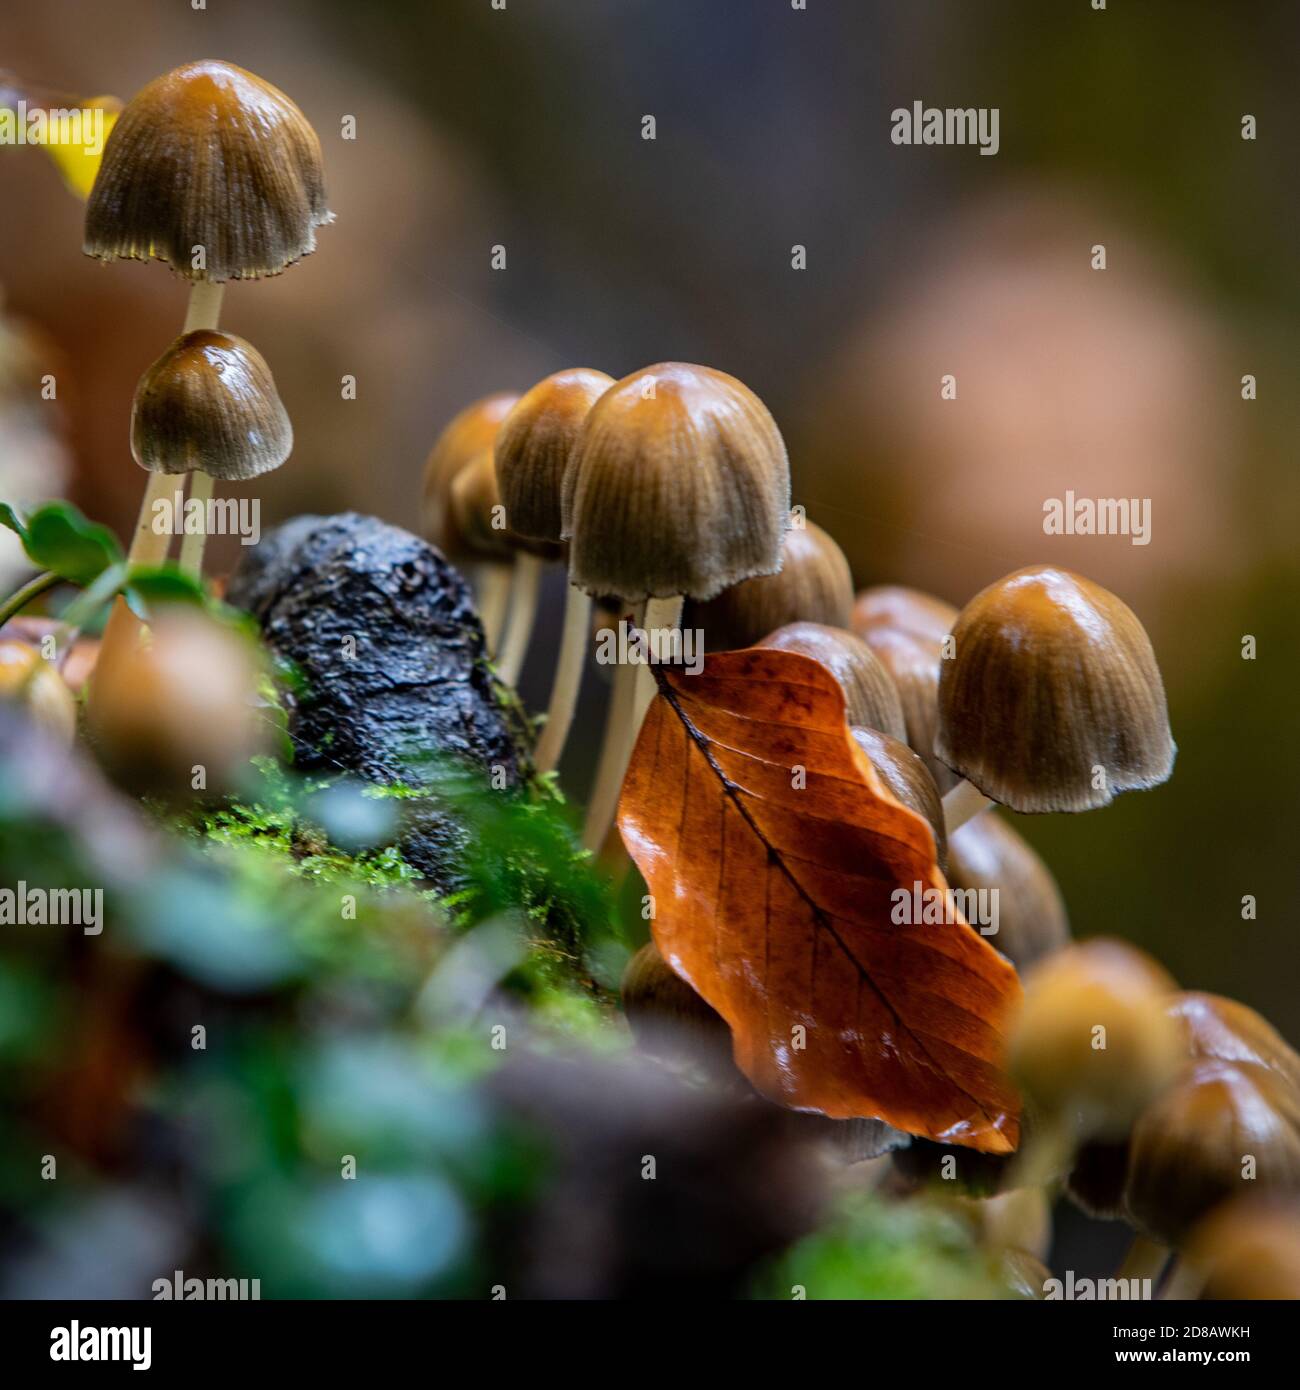 Woodland mushrooms in Autumn Stock Photo